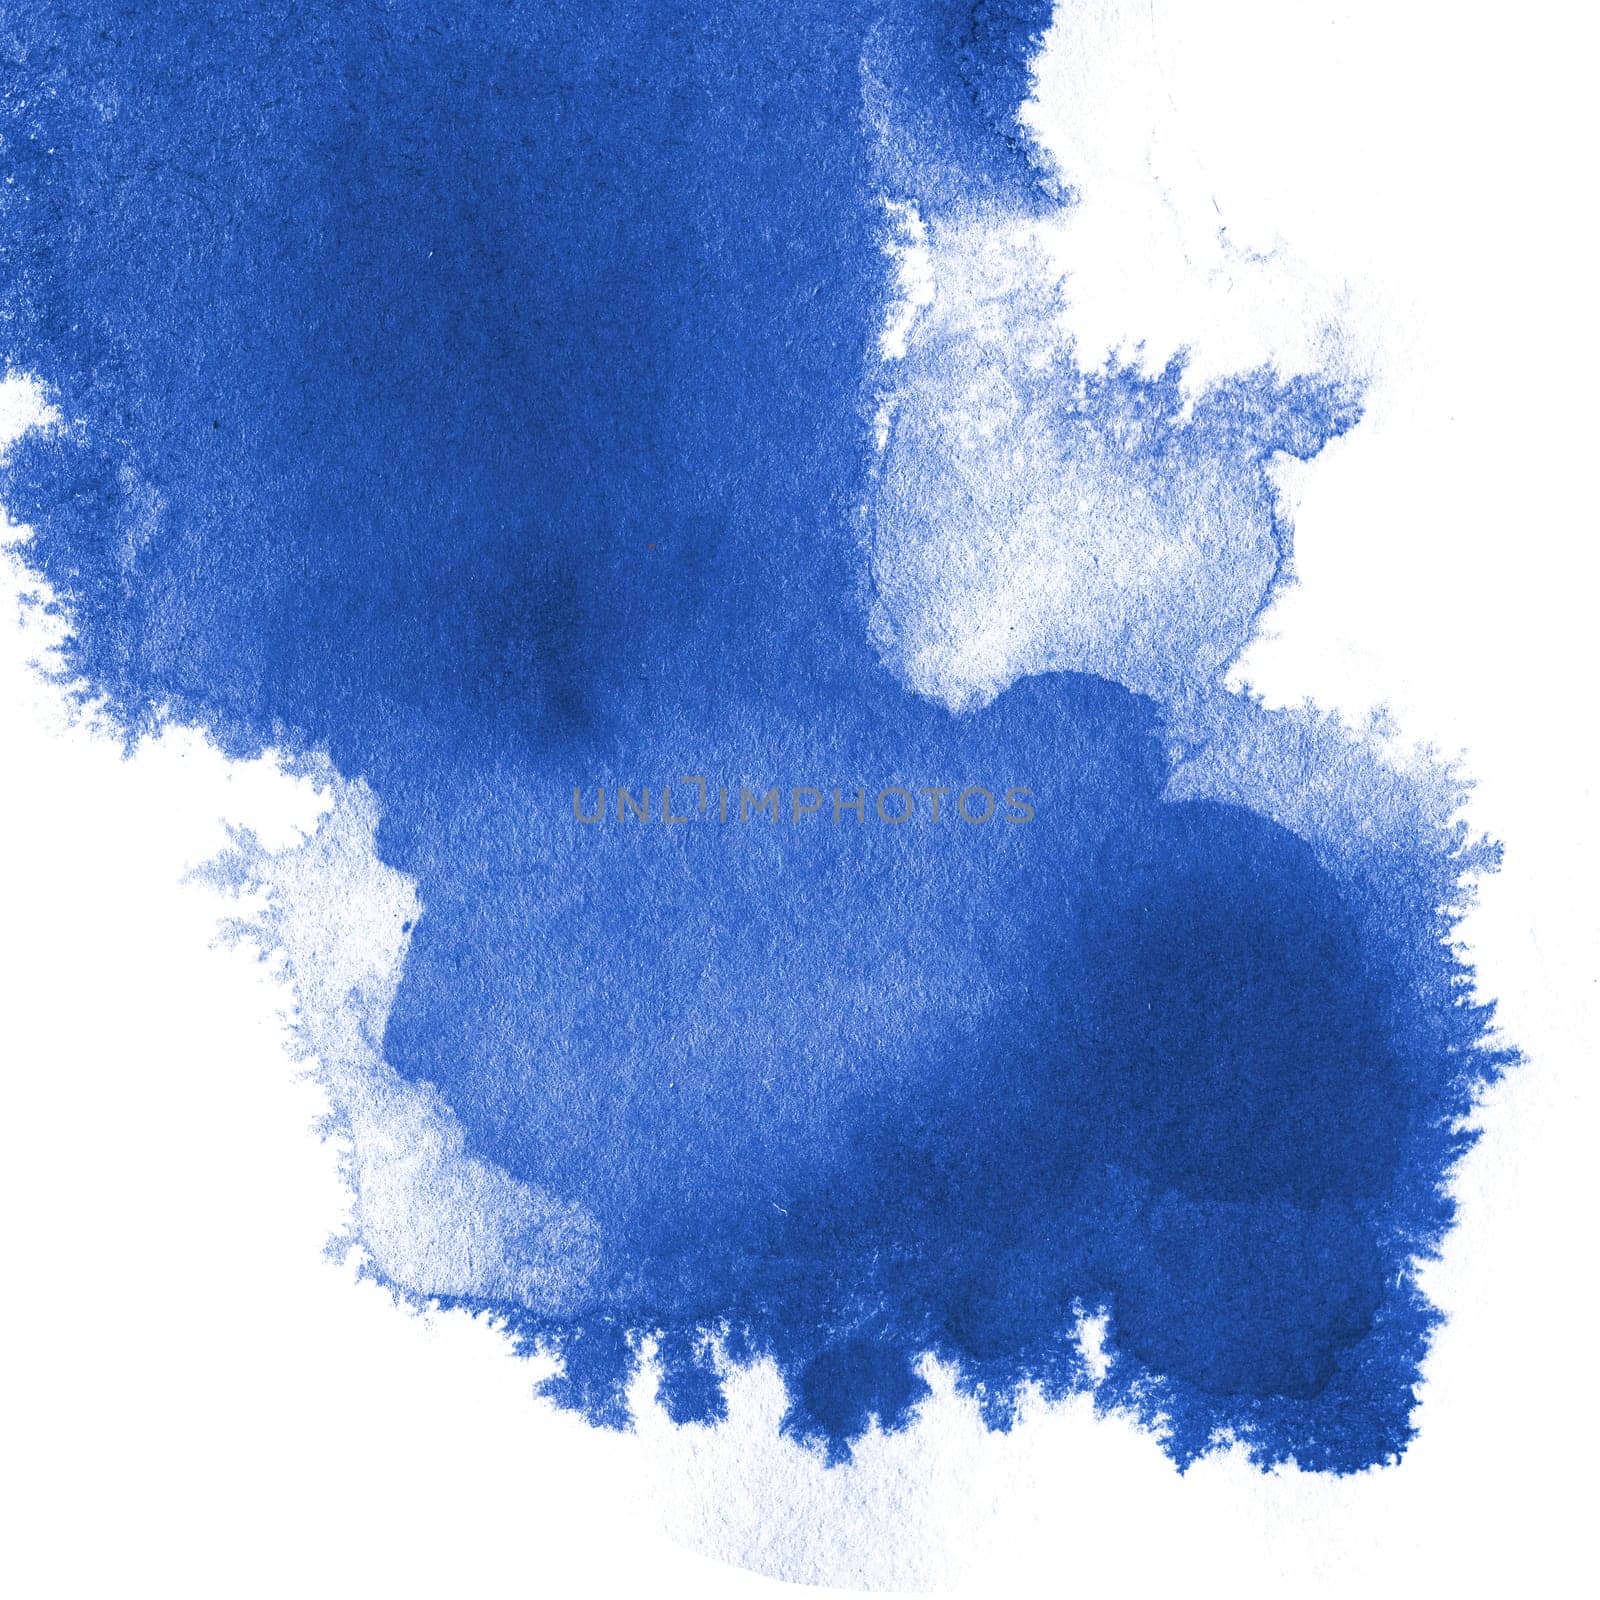 Hand Drawn Background with Watercolor Blue Splashes. by Rina_Dozornaya